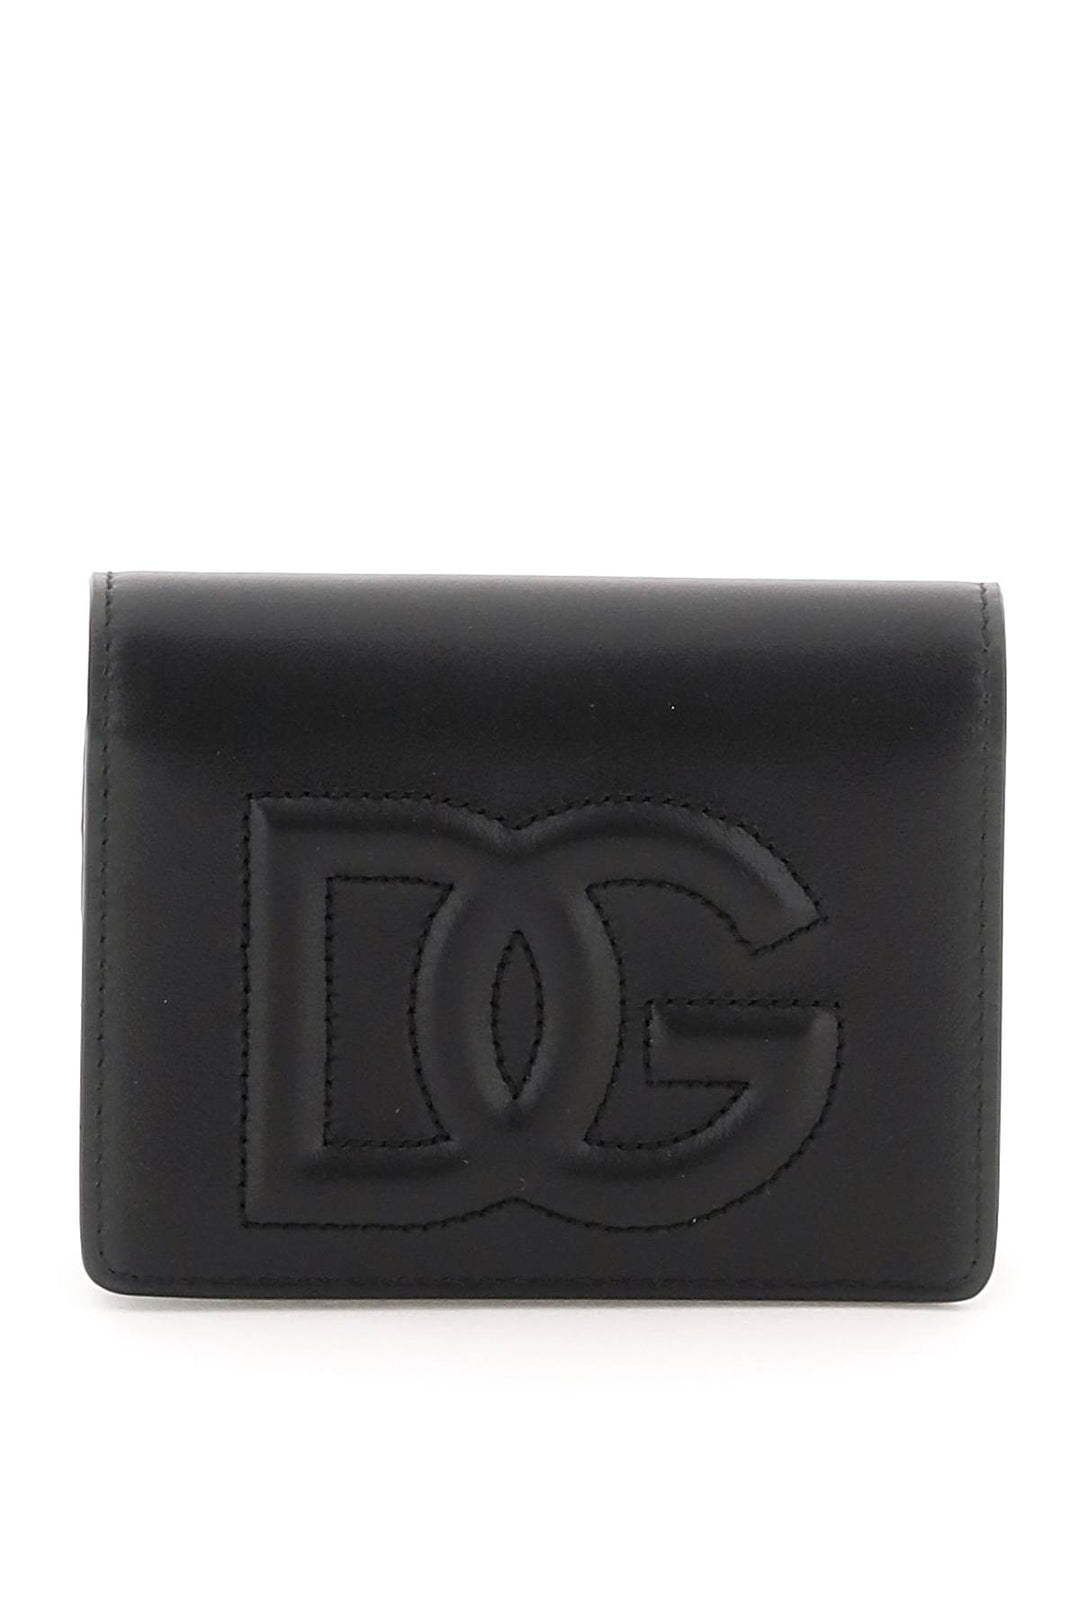 dg logo wallet-0